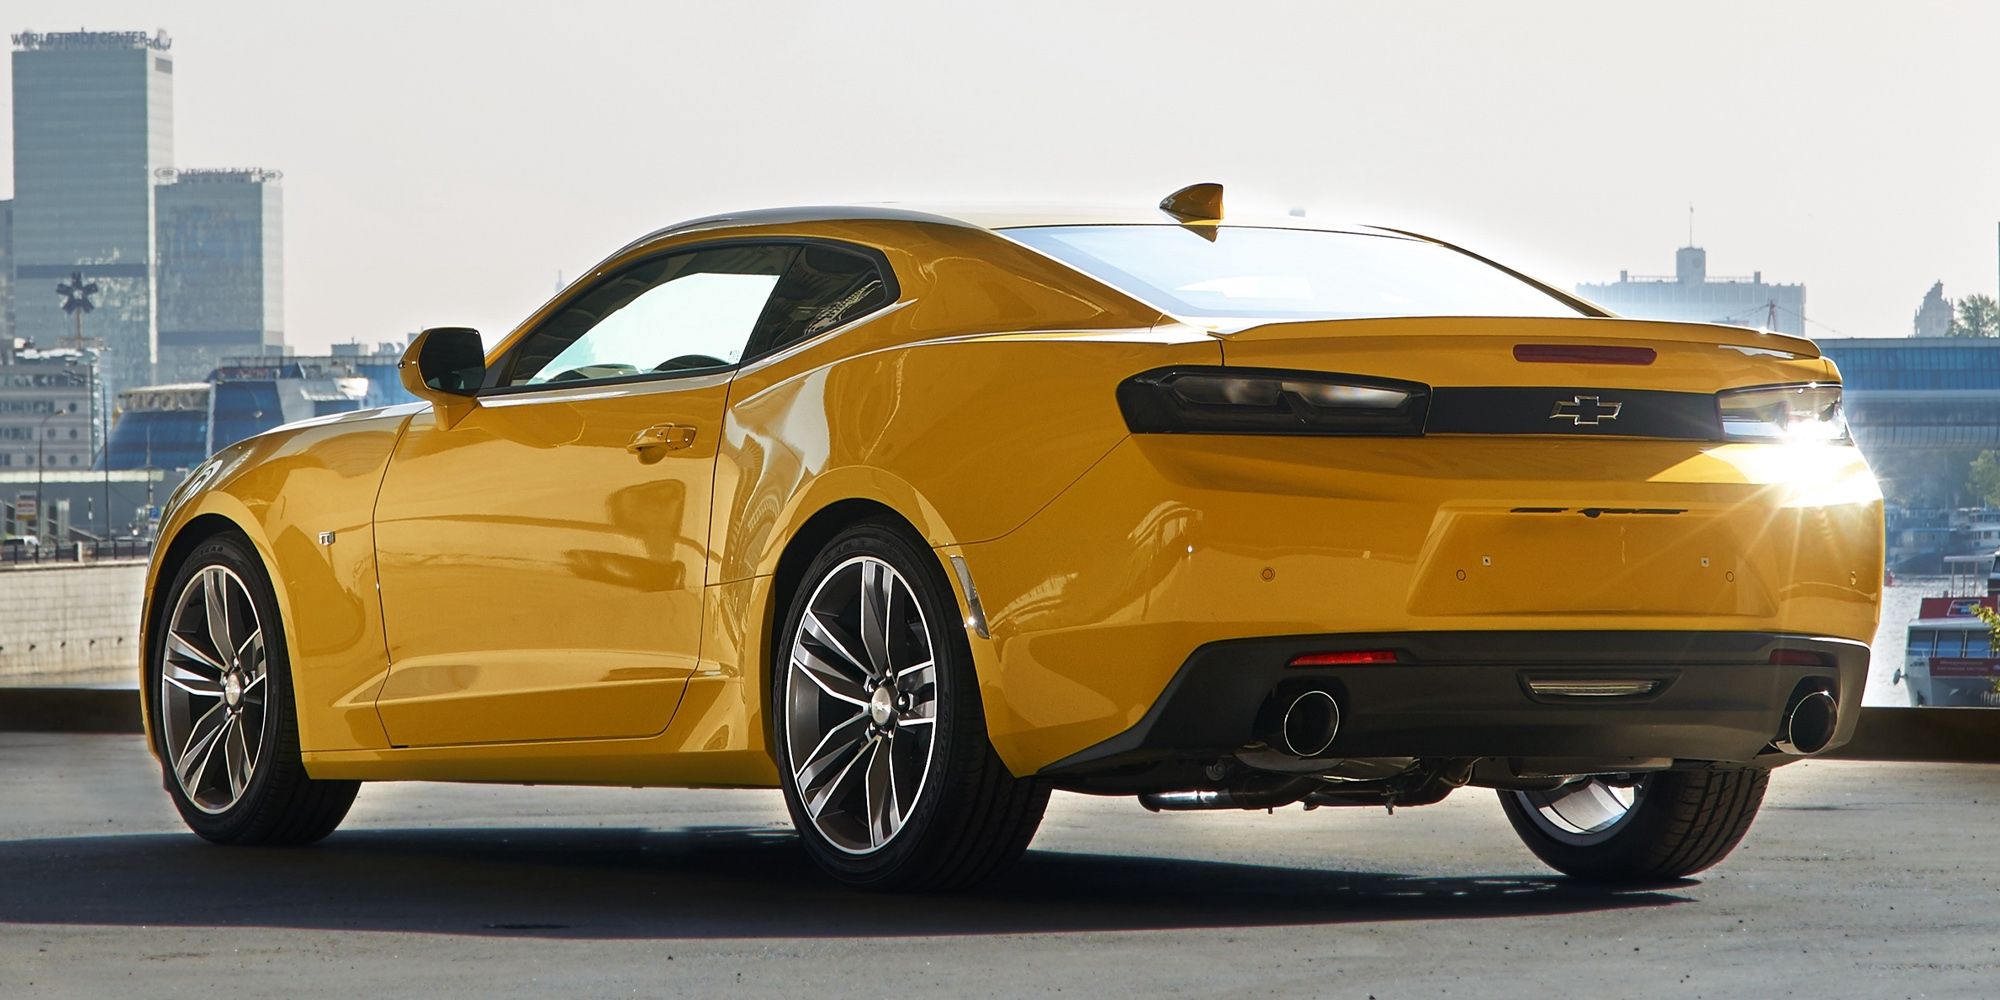 The rear of a yellow Camaro 